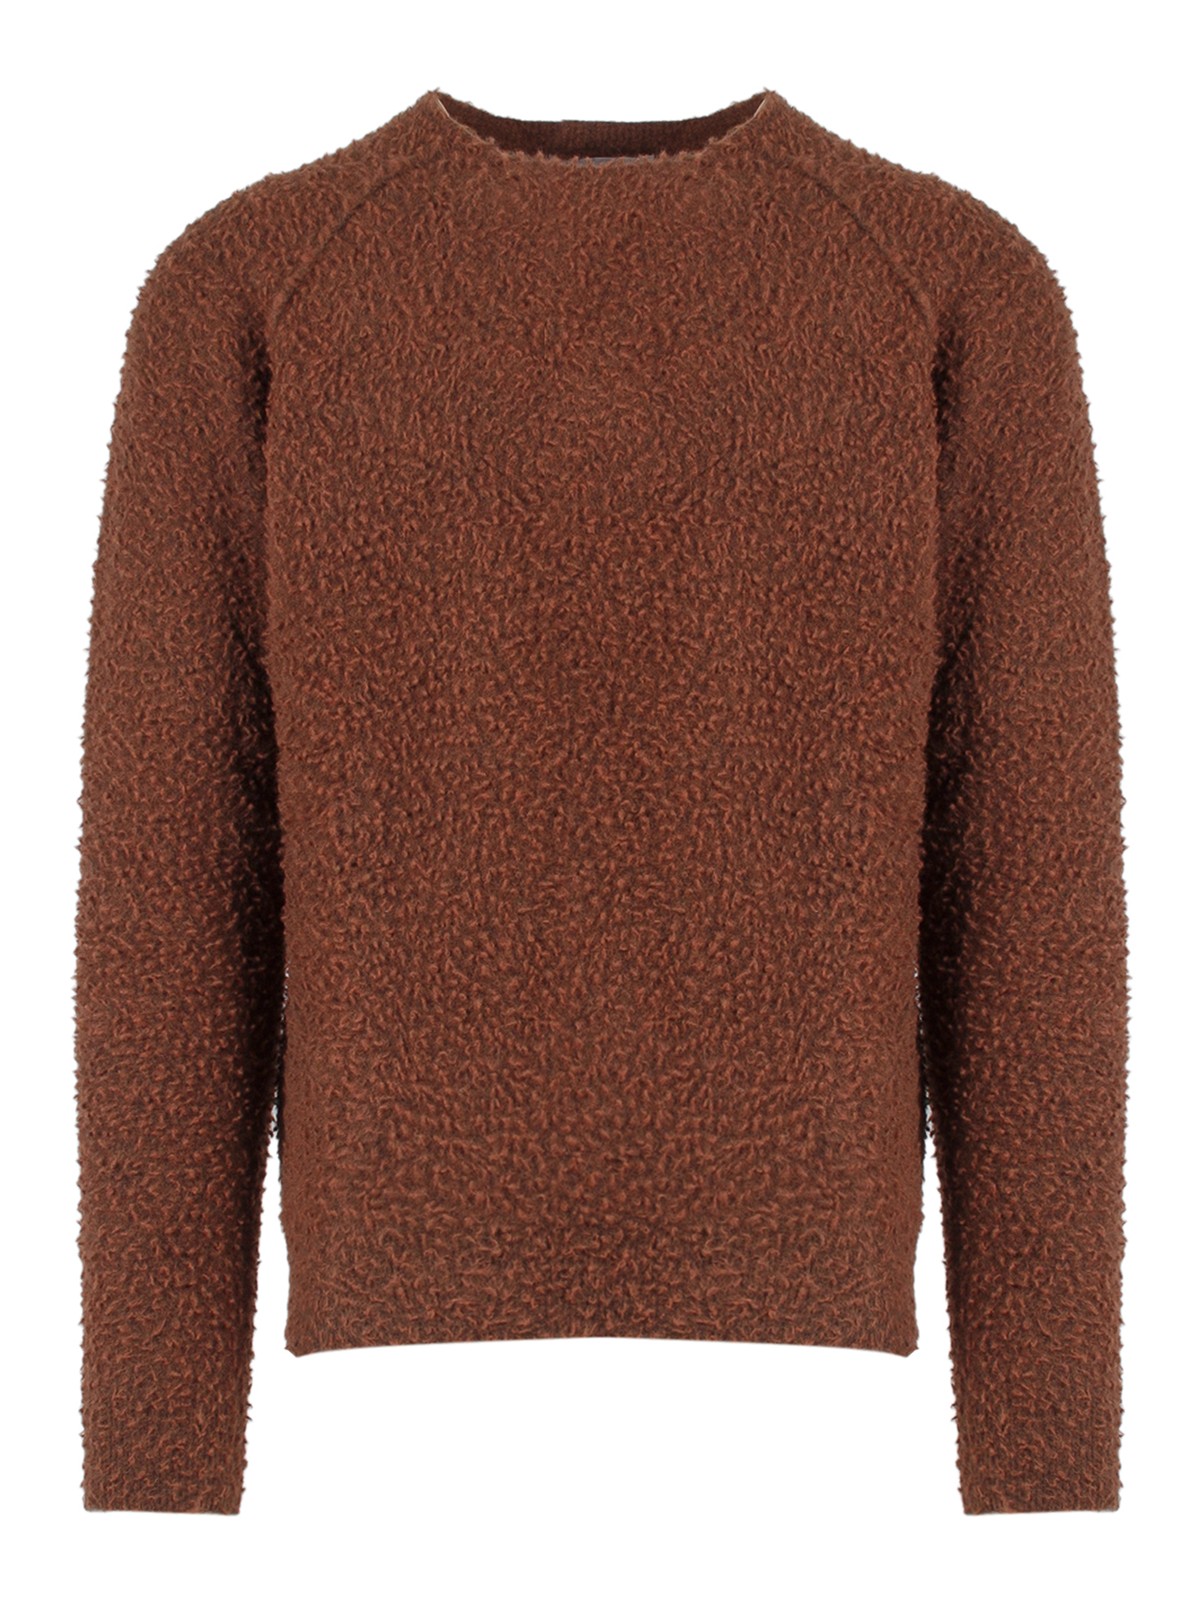 Original Vintage Style Sweater In Brown